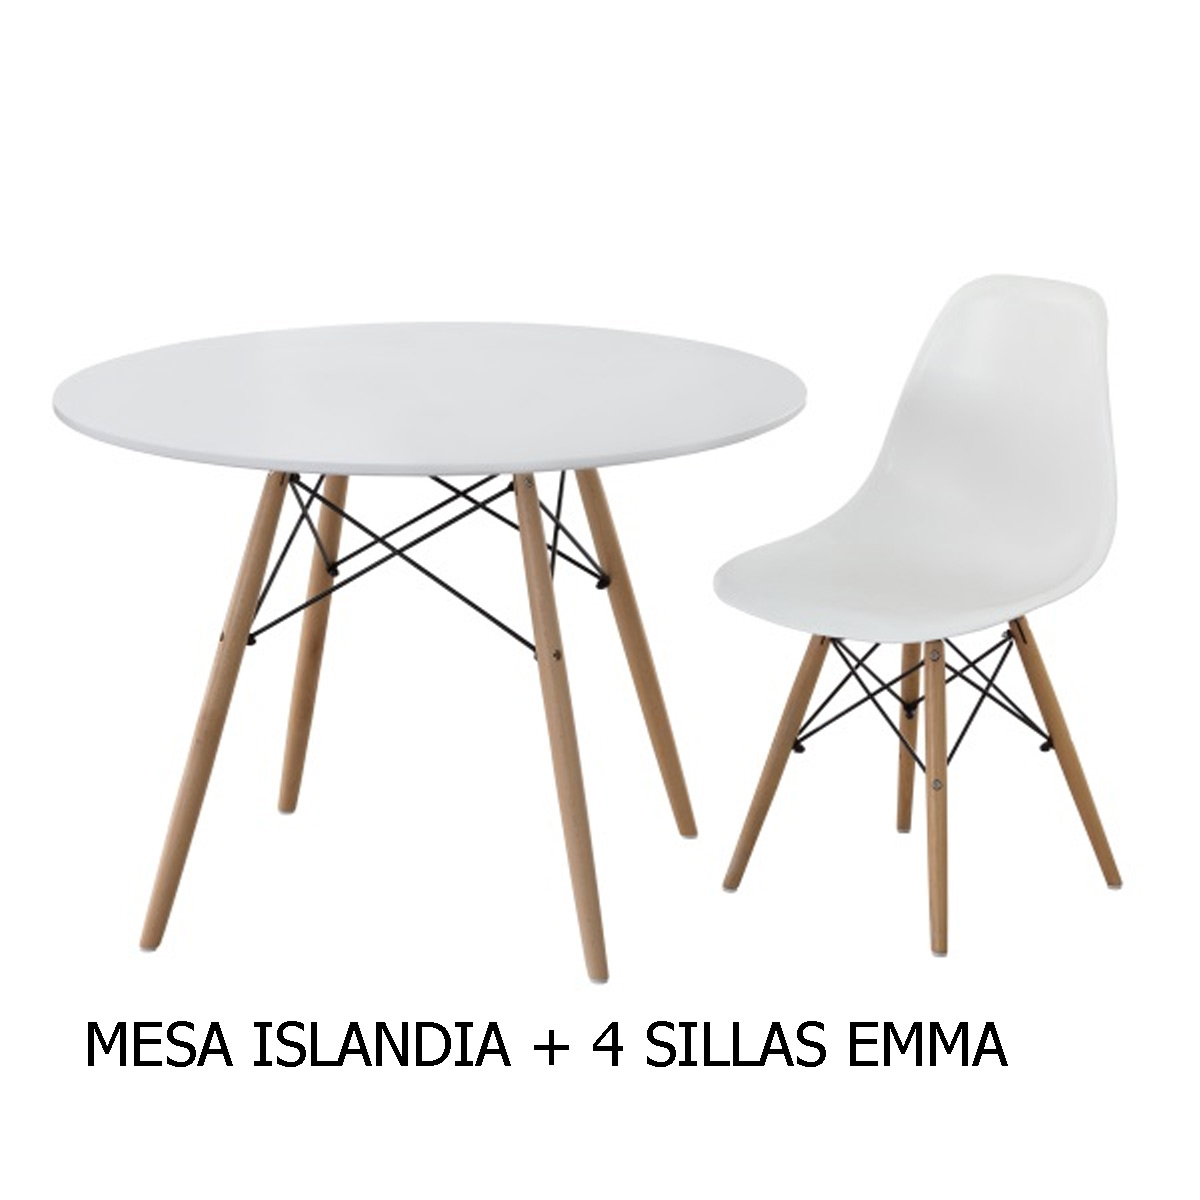 Conjunto mesa ISLANDIA+ 4 sillas EMMA